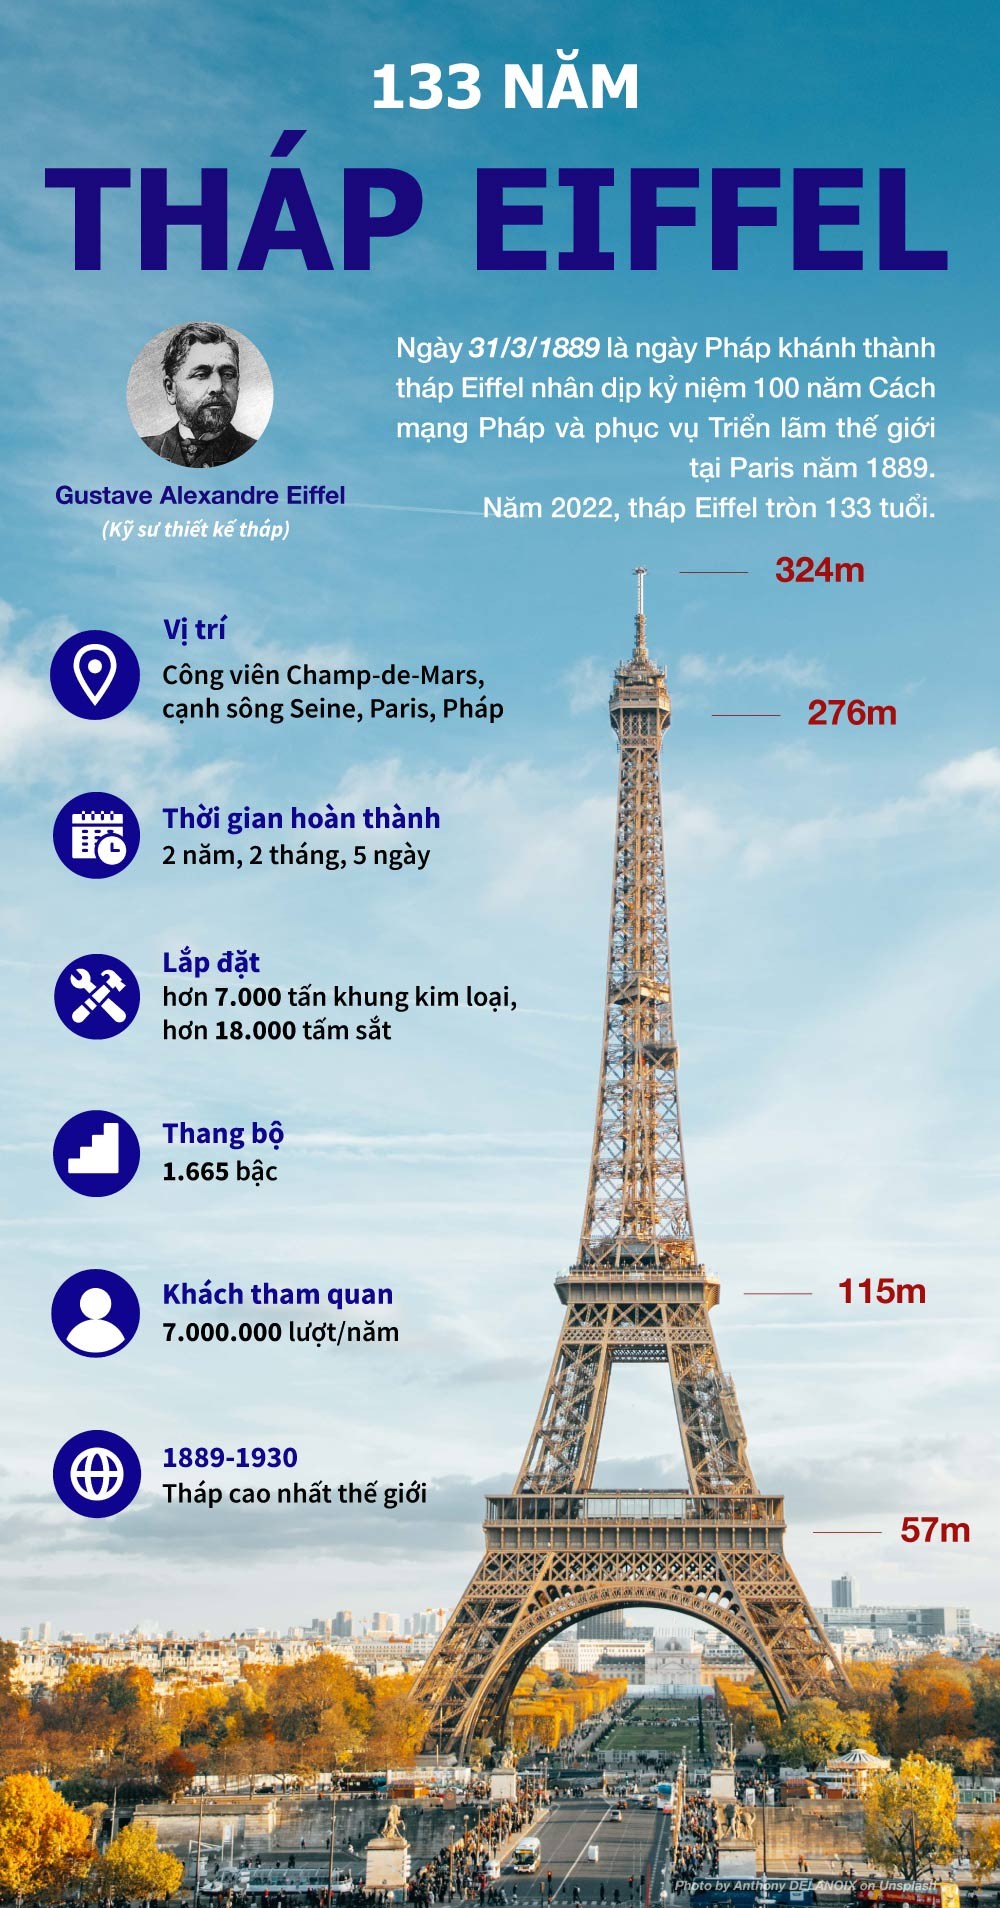 Tháp Eiffel tròn 133 năm tuổi. (Nguồn: Báo TG&VN)